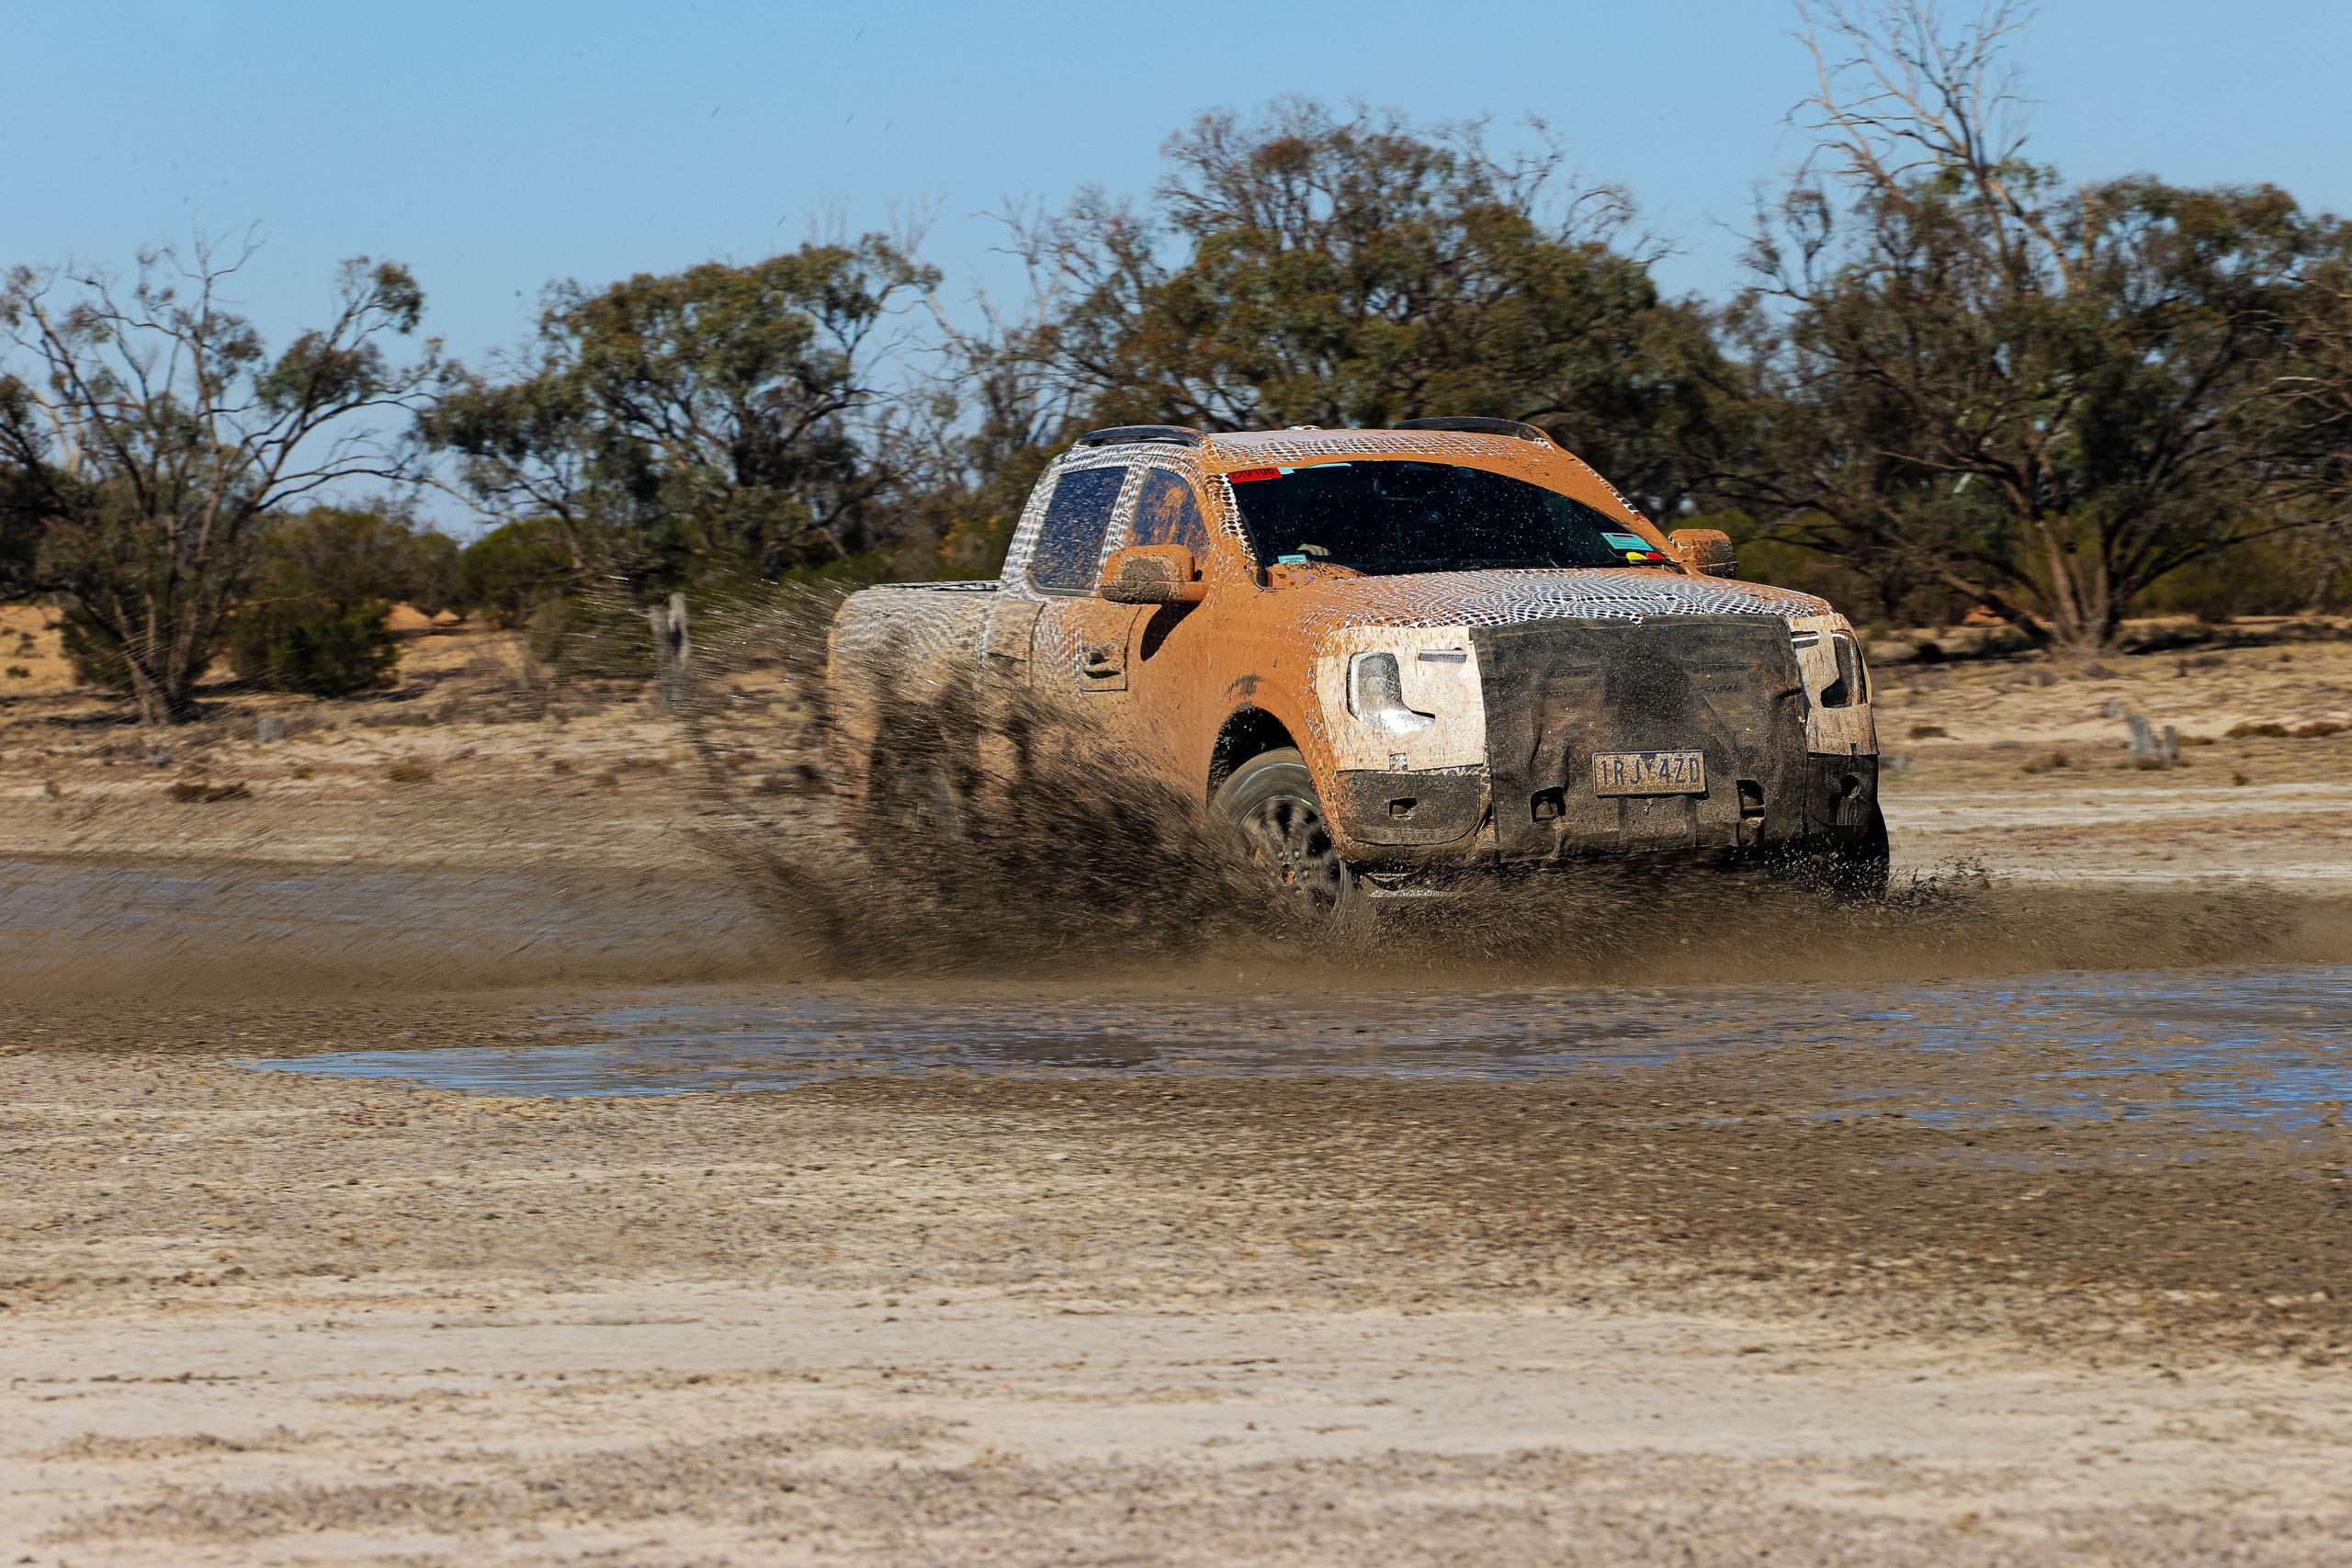 2022 Ford Ranger Prototyp Australien | Fanaticar Magazin